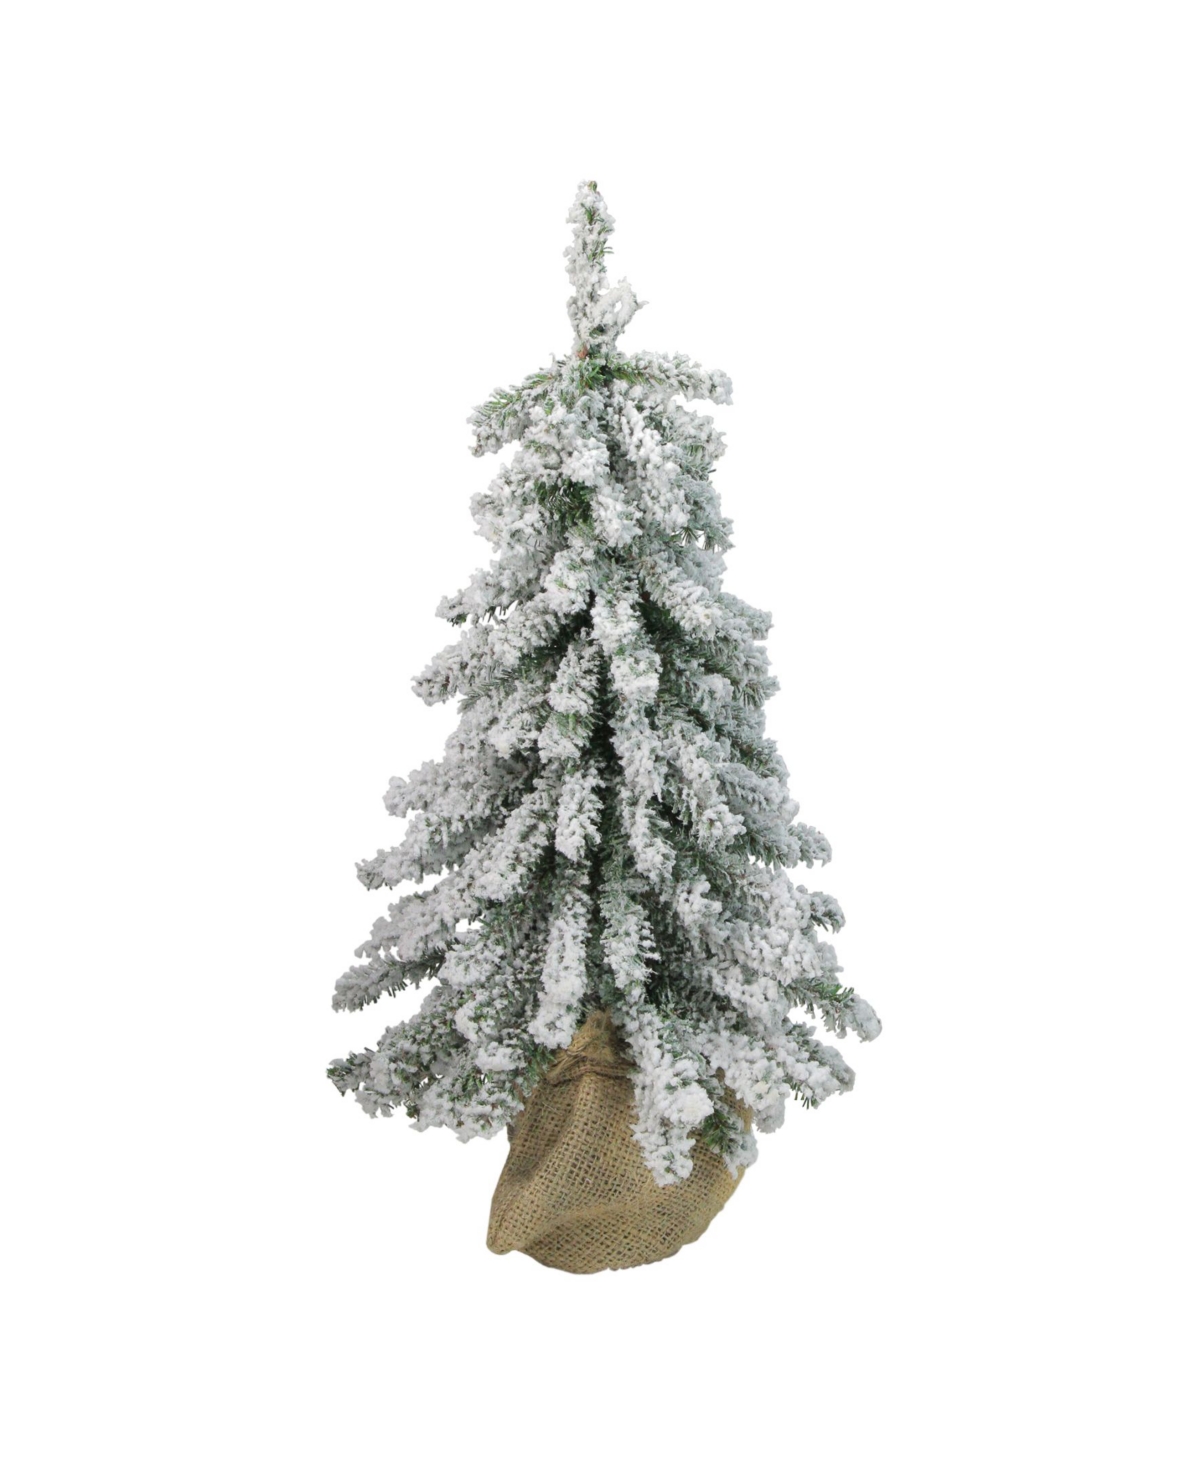 15" Flocked Downswept Mini Village Pine Artificial Christmas Tree in Burlap Base - Unlit - Green